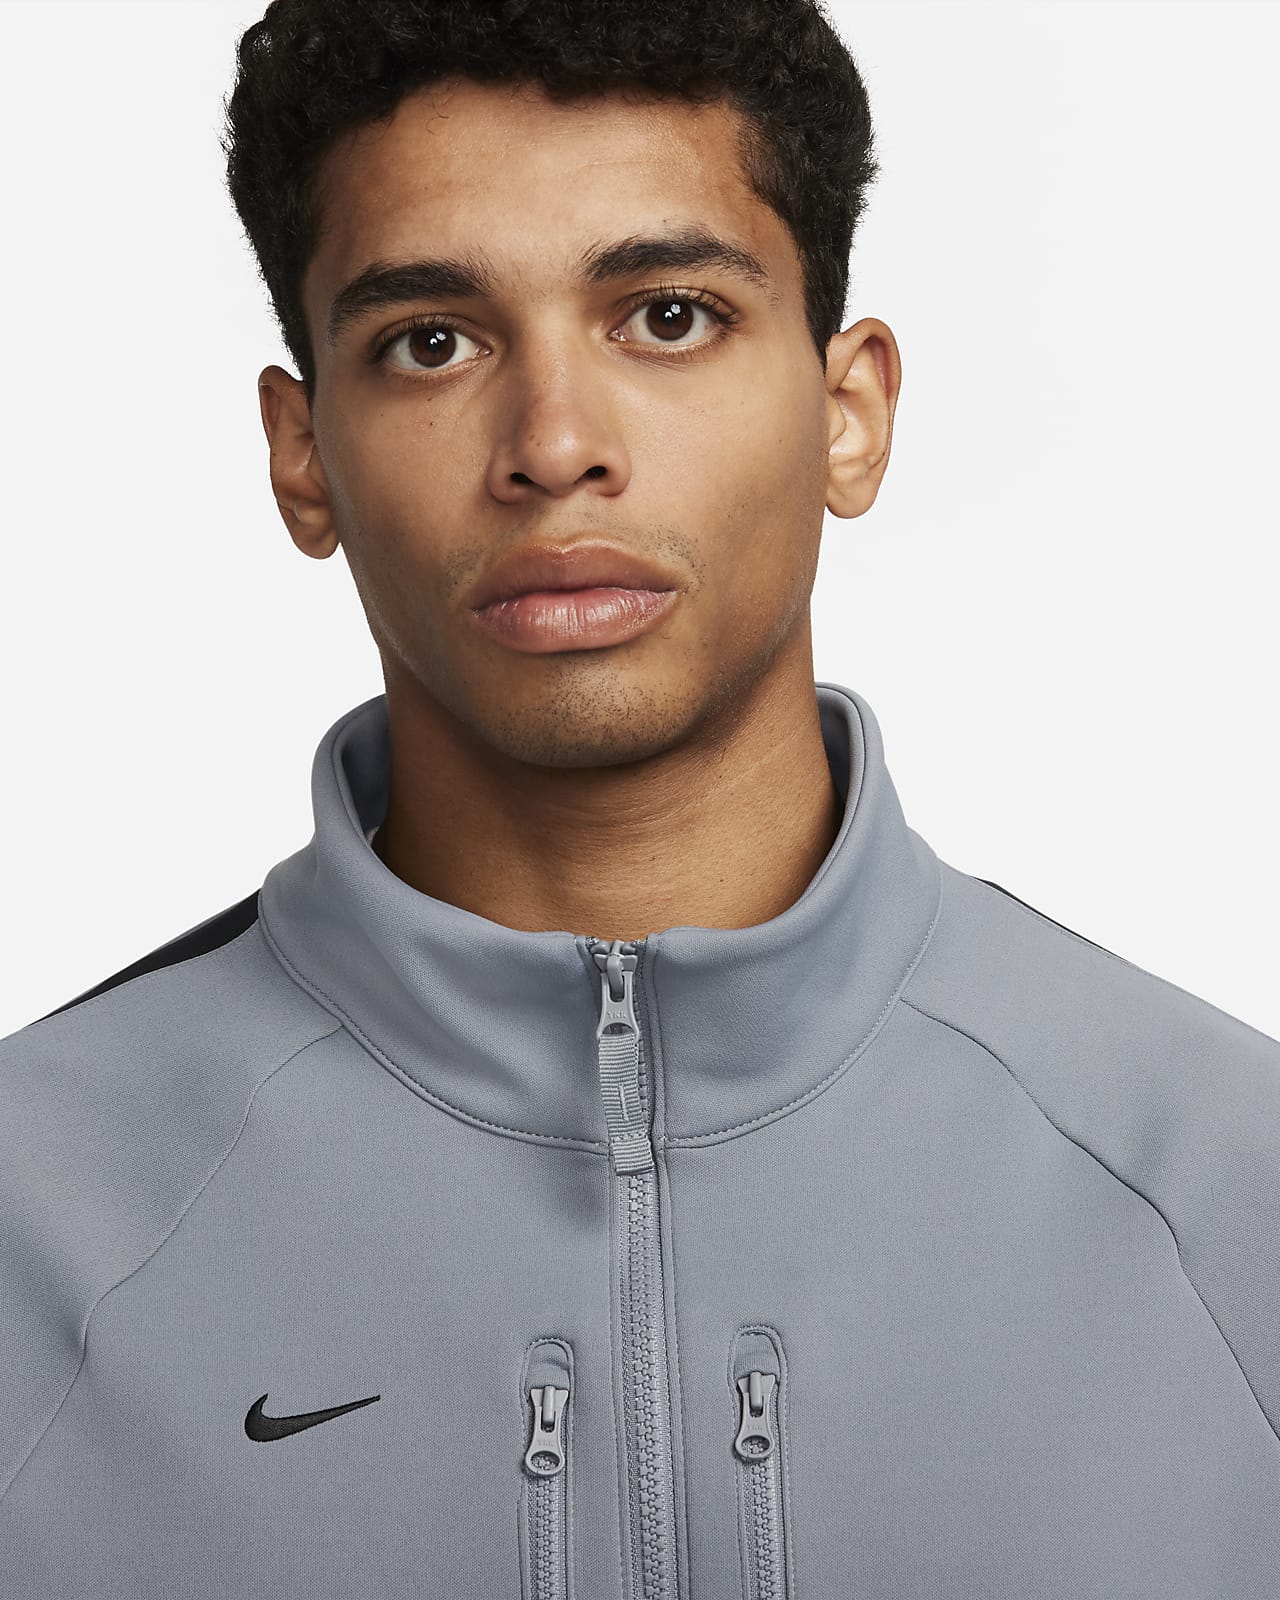 Nike Culture of Football Men's Dri-FIT Soccer Tracksuit.